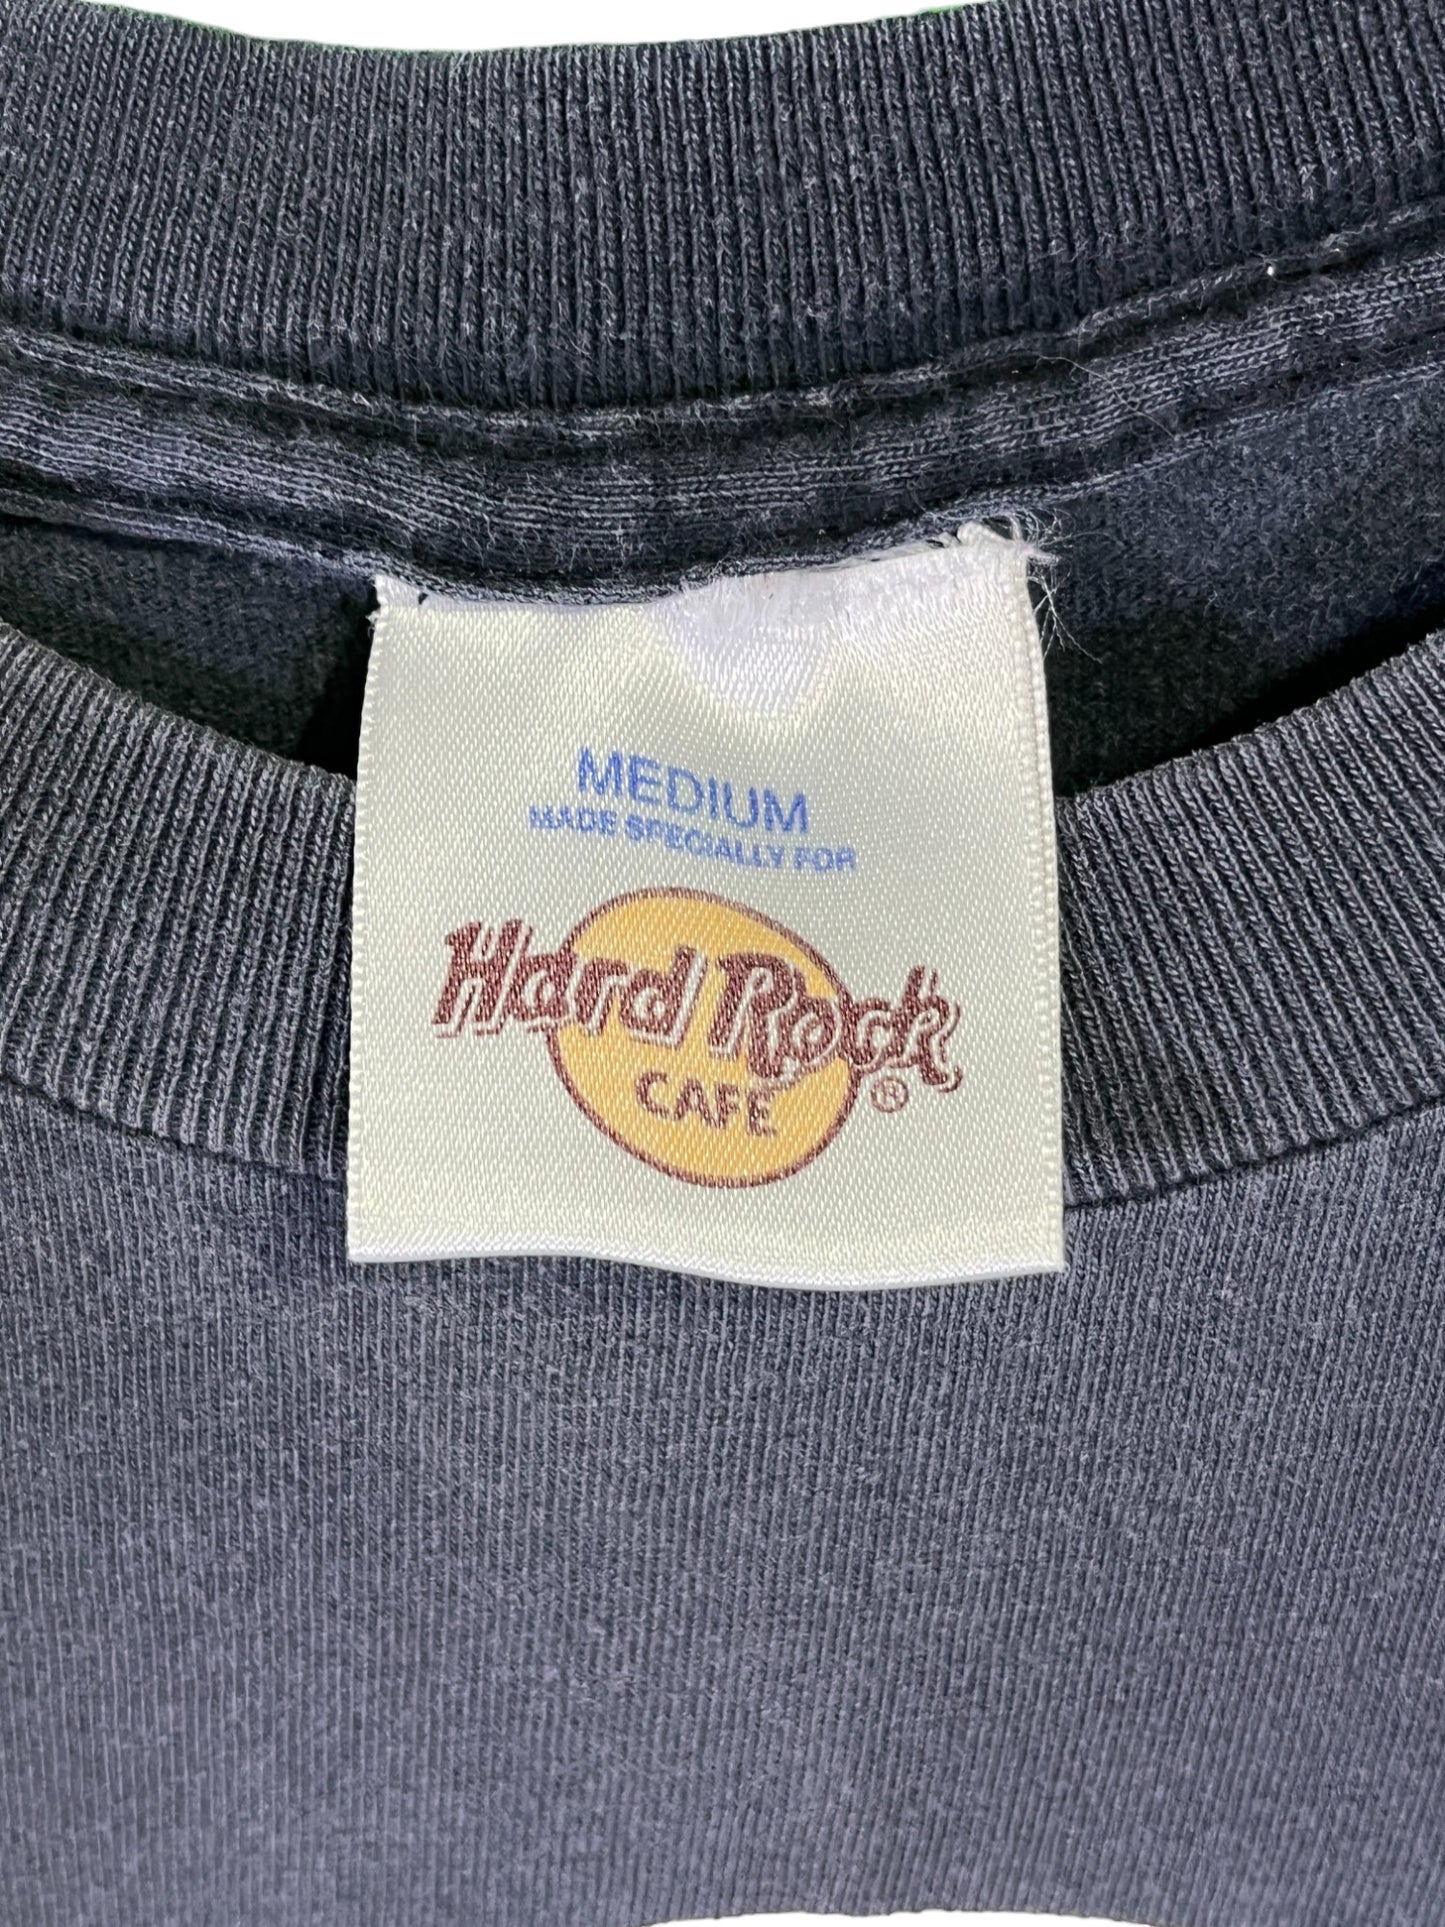 Vintage 90's Hard Rock Cafe Orlando Graphic Tee Size Medium